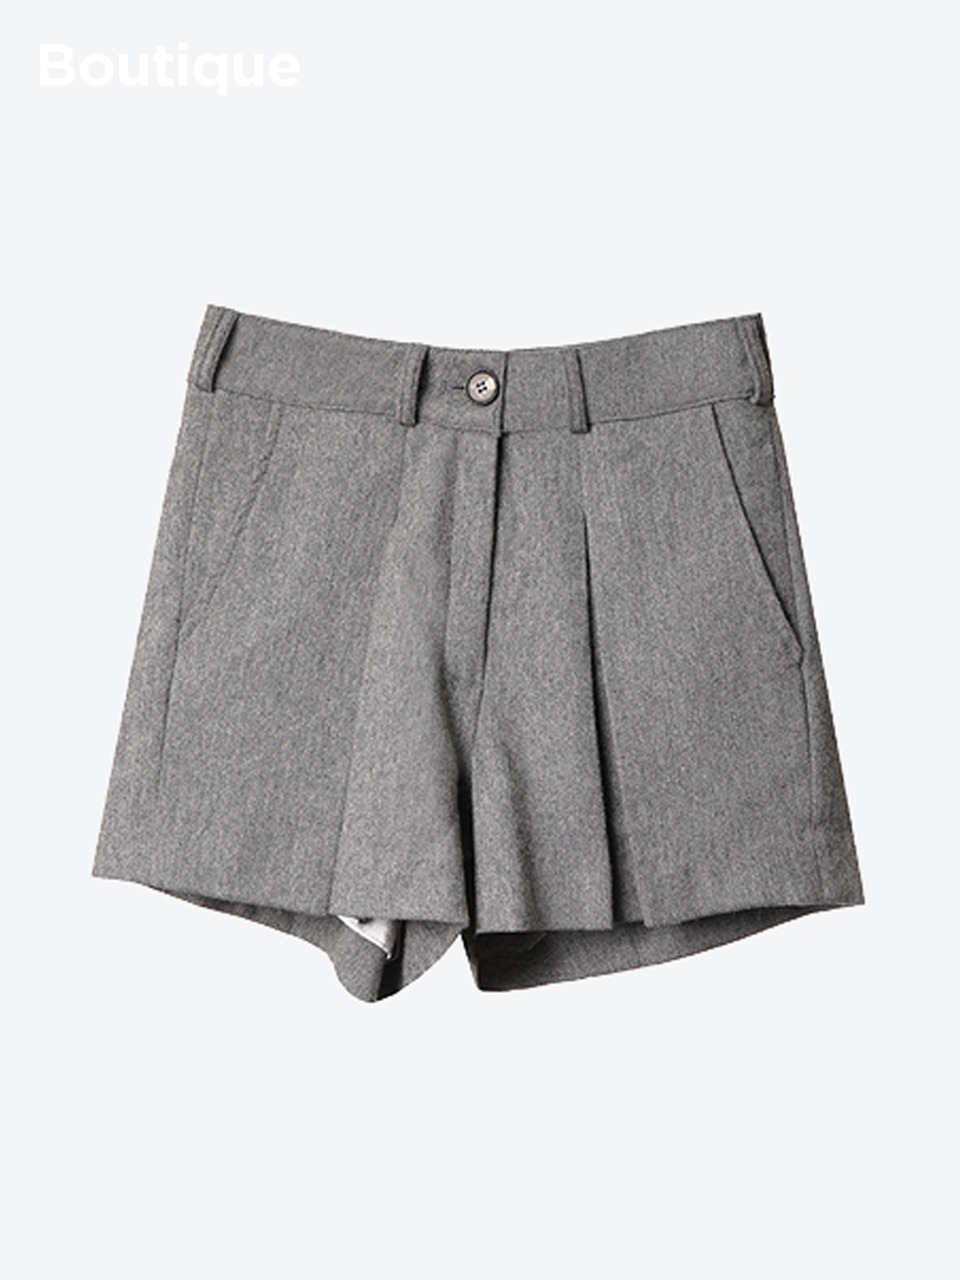 Inverted Box Pleats Shorts (grey)